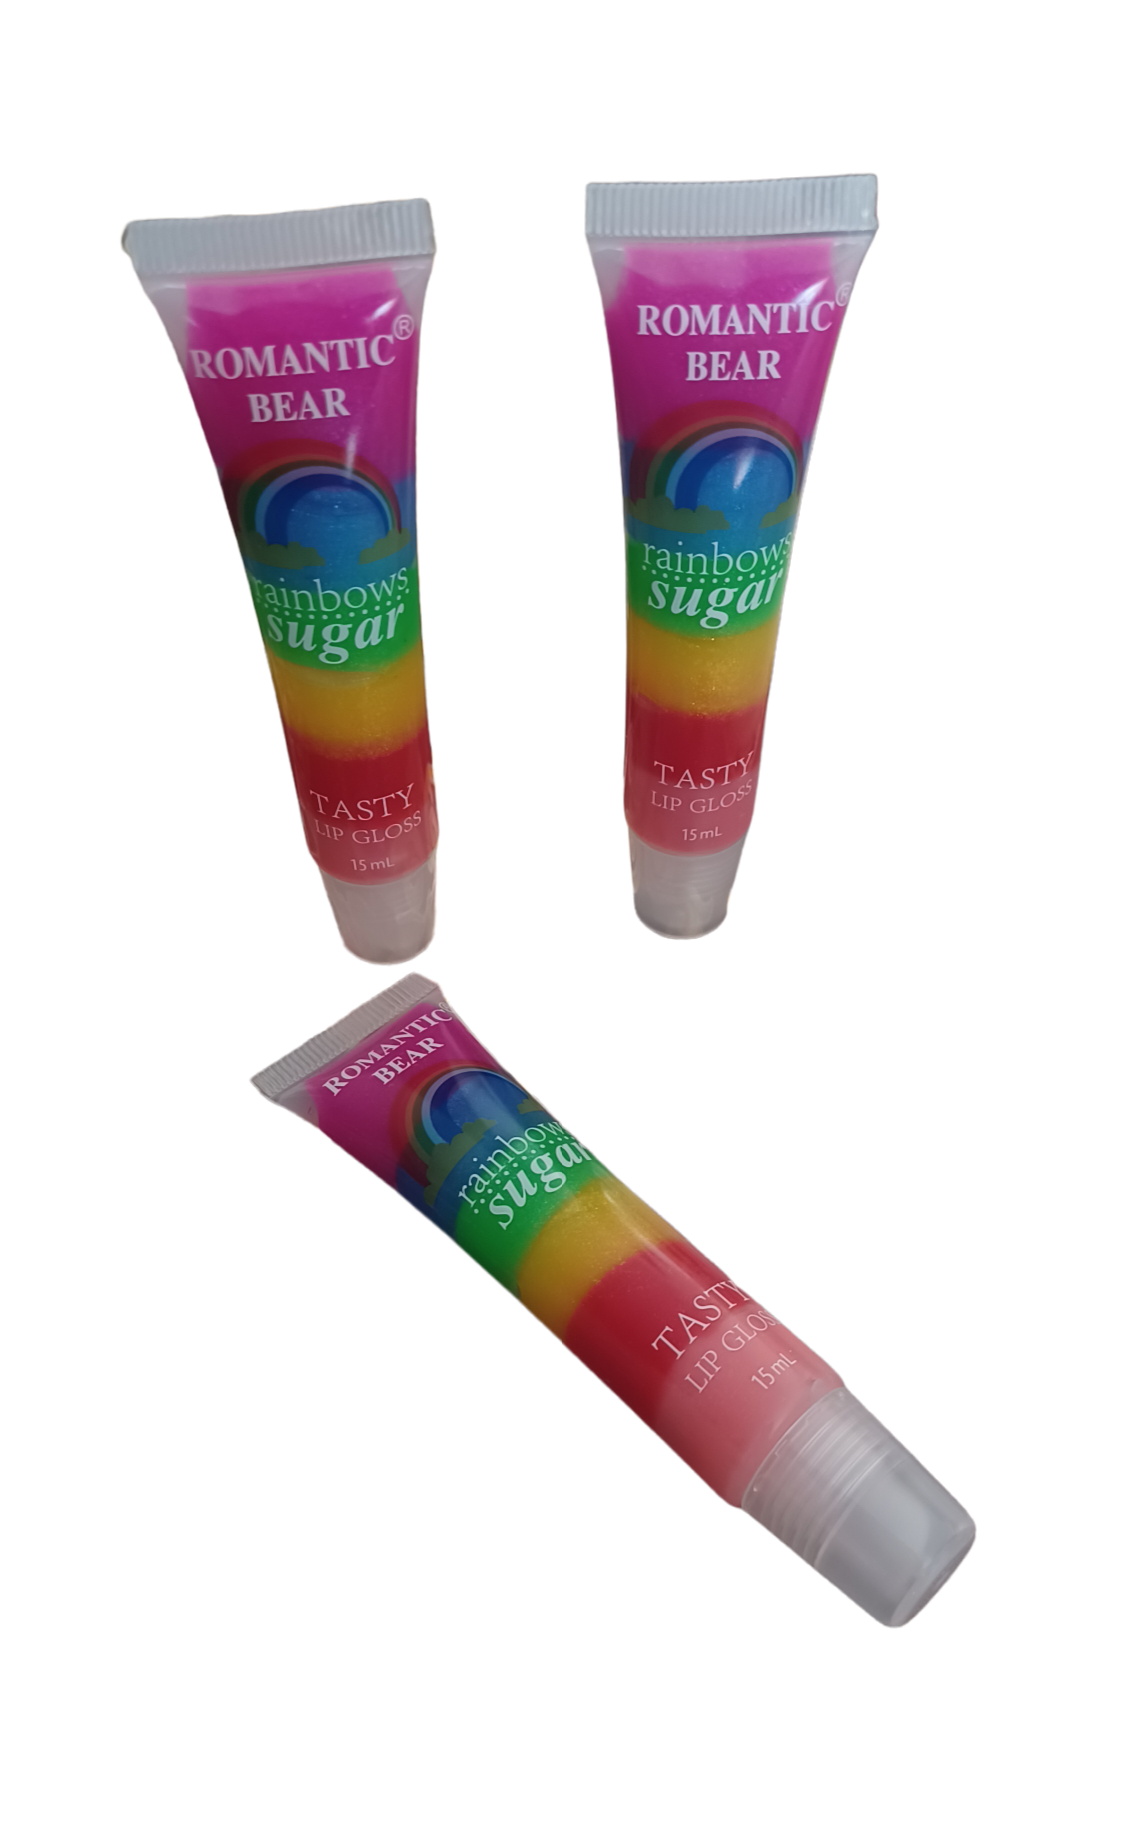 Rainbow Sugar Lip Gloss